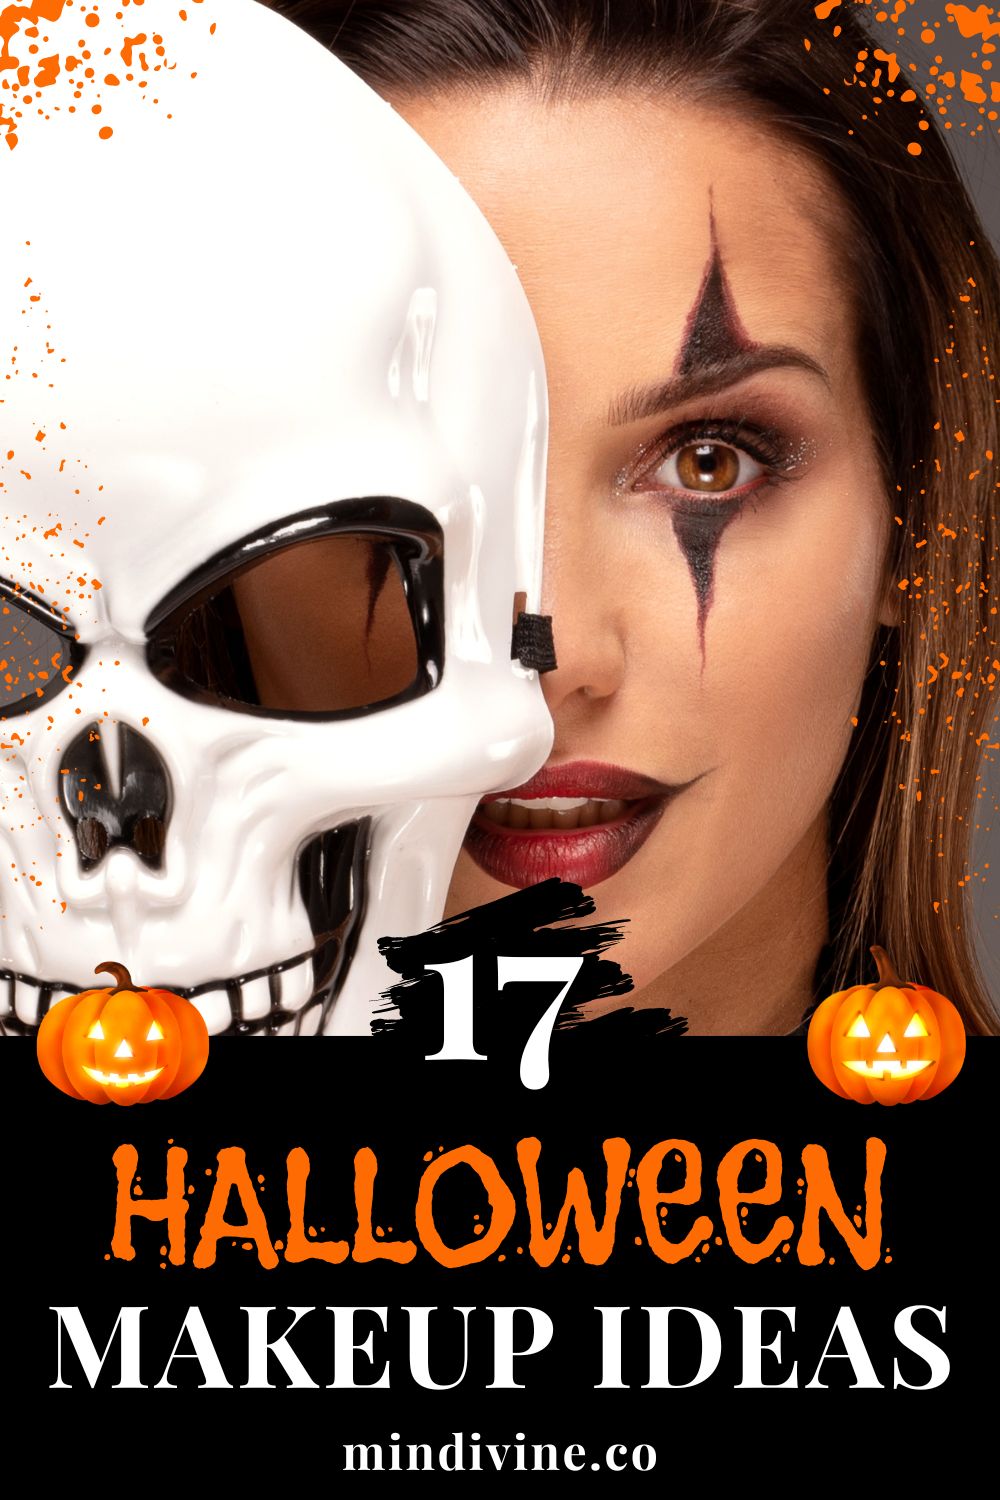 Beautiful girl in Halloween makeup posing with skull mask.